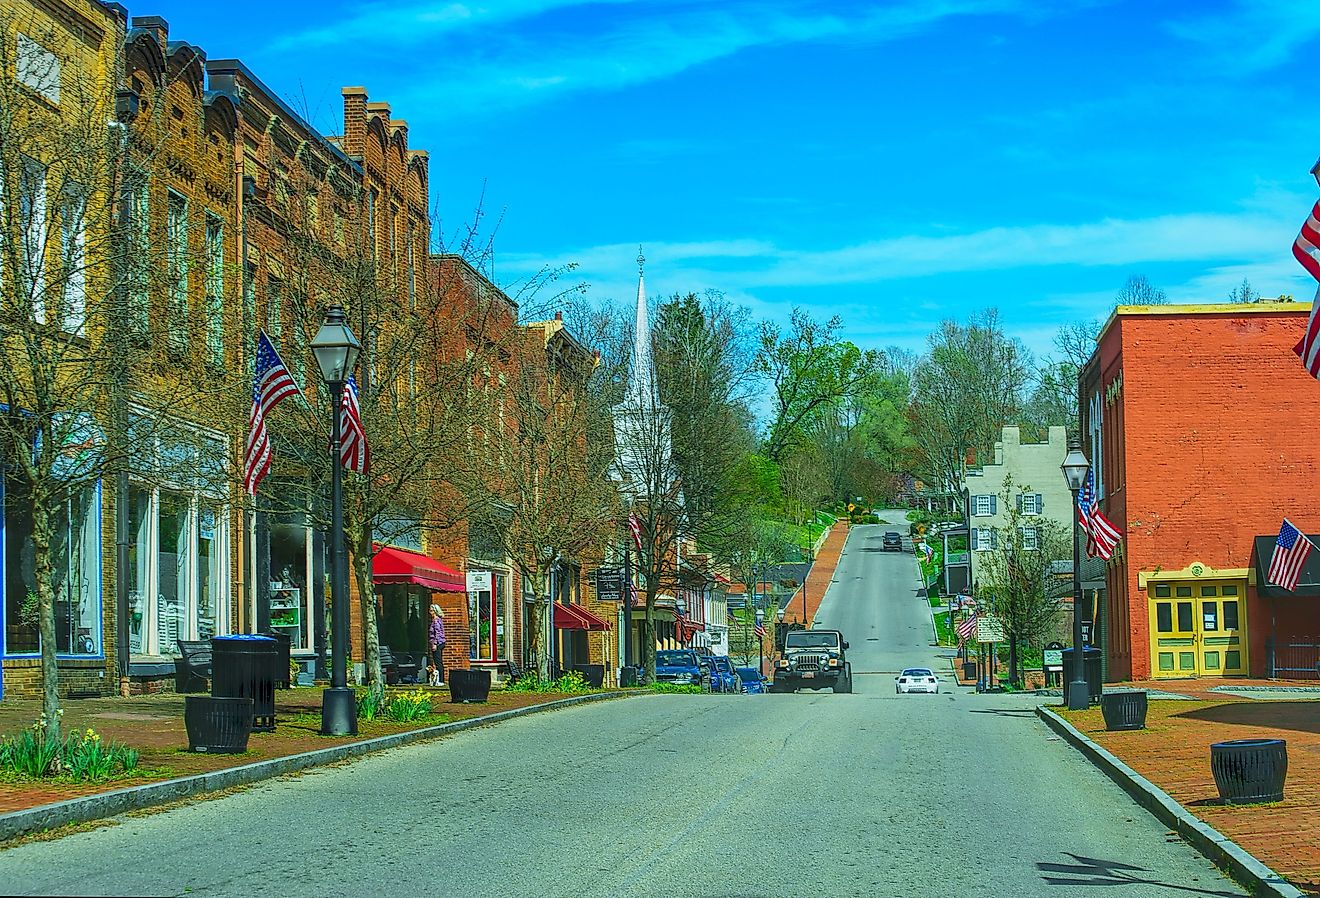 Downtown street in Jonesborough, Tennessee. Image credit Dee Browning via Shutterstock